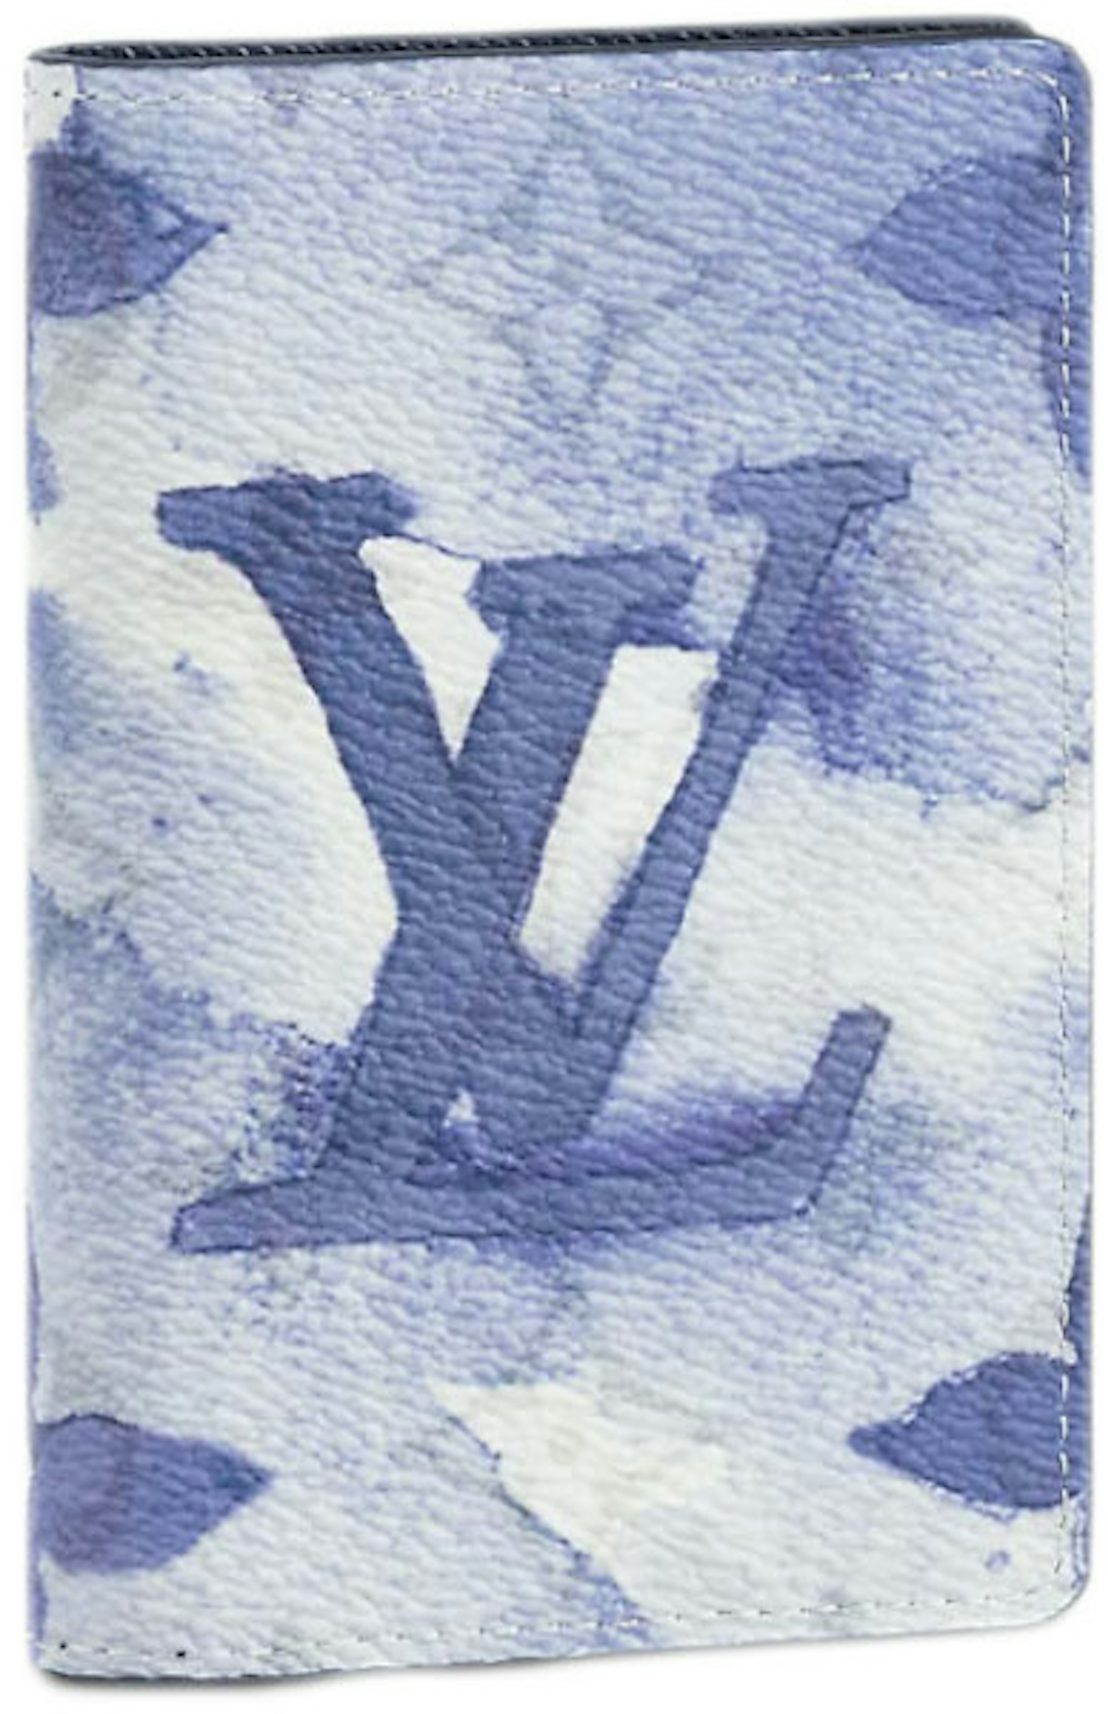 LOUIS VUITTON POCKET ORGANIZER "INK WATERCOLOR BLUE" M80455